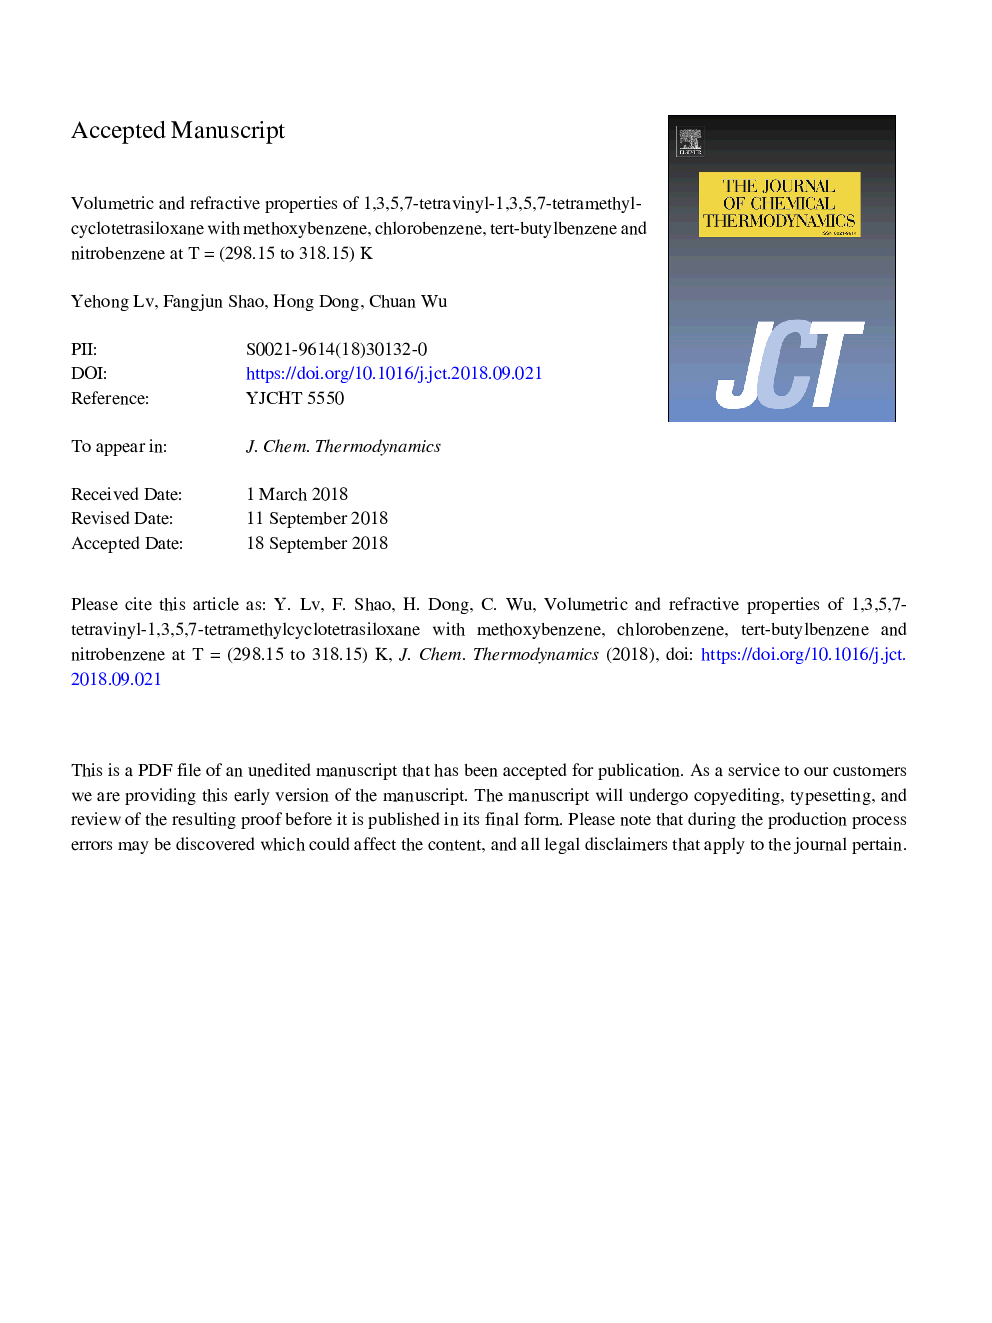 Volumetric and refractive properties of 1,3,5,7-tetravinyl-1,3,5,7-tetramethylcyclotetrasiloxane with methoxybenzene, chlorobenzene, tert-butylbenzene and nitrobenzene at Tâ¯=â¯(298.15-318.15)â¯K